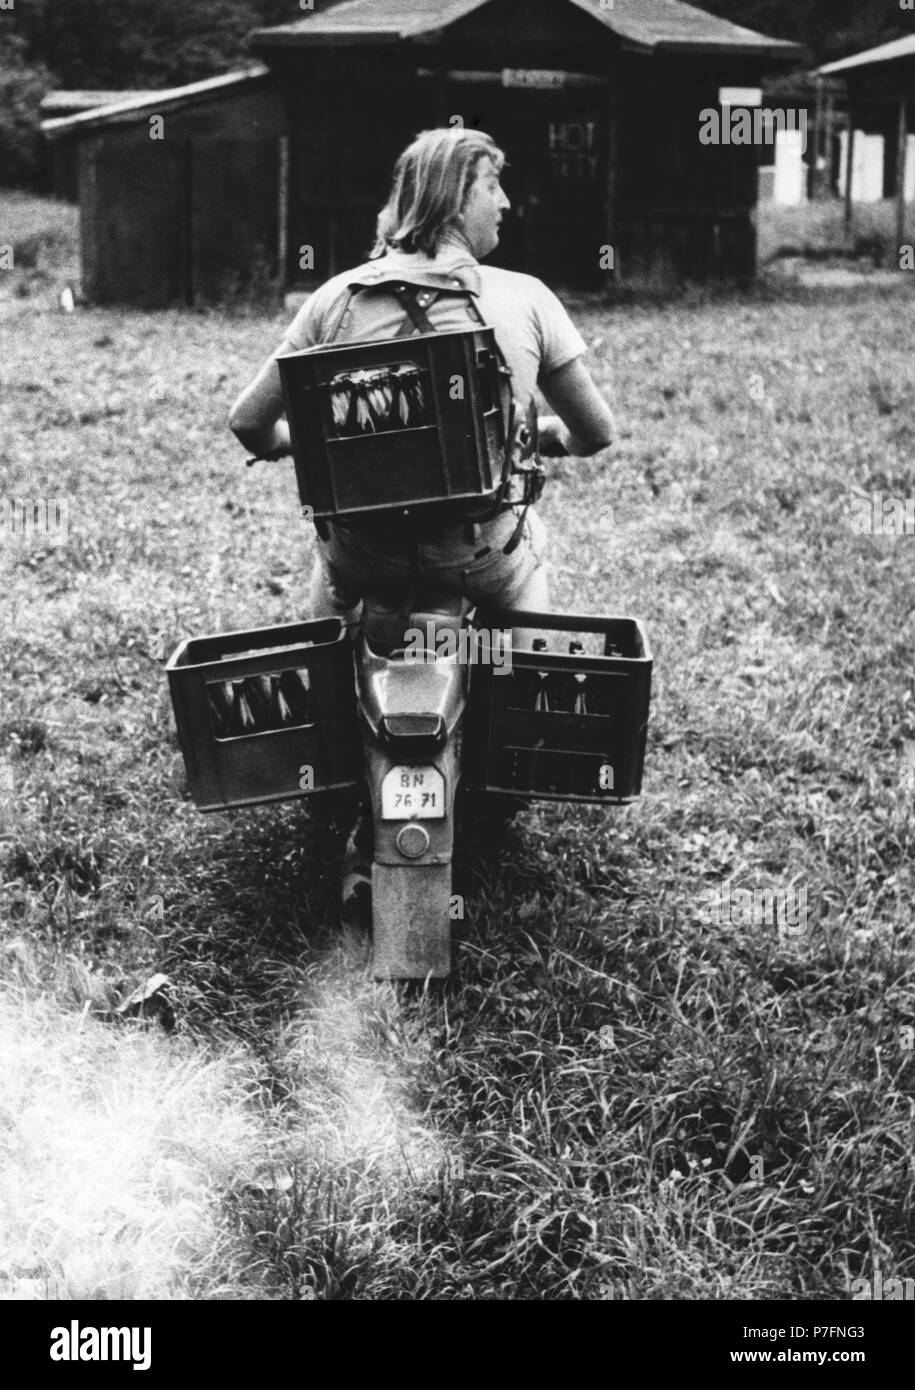 Bierkästen mit dem Moped transportiert werden kann. 1970 s, genaue Ort unbekannt, Tschechische Republik Stockfoto